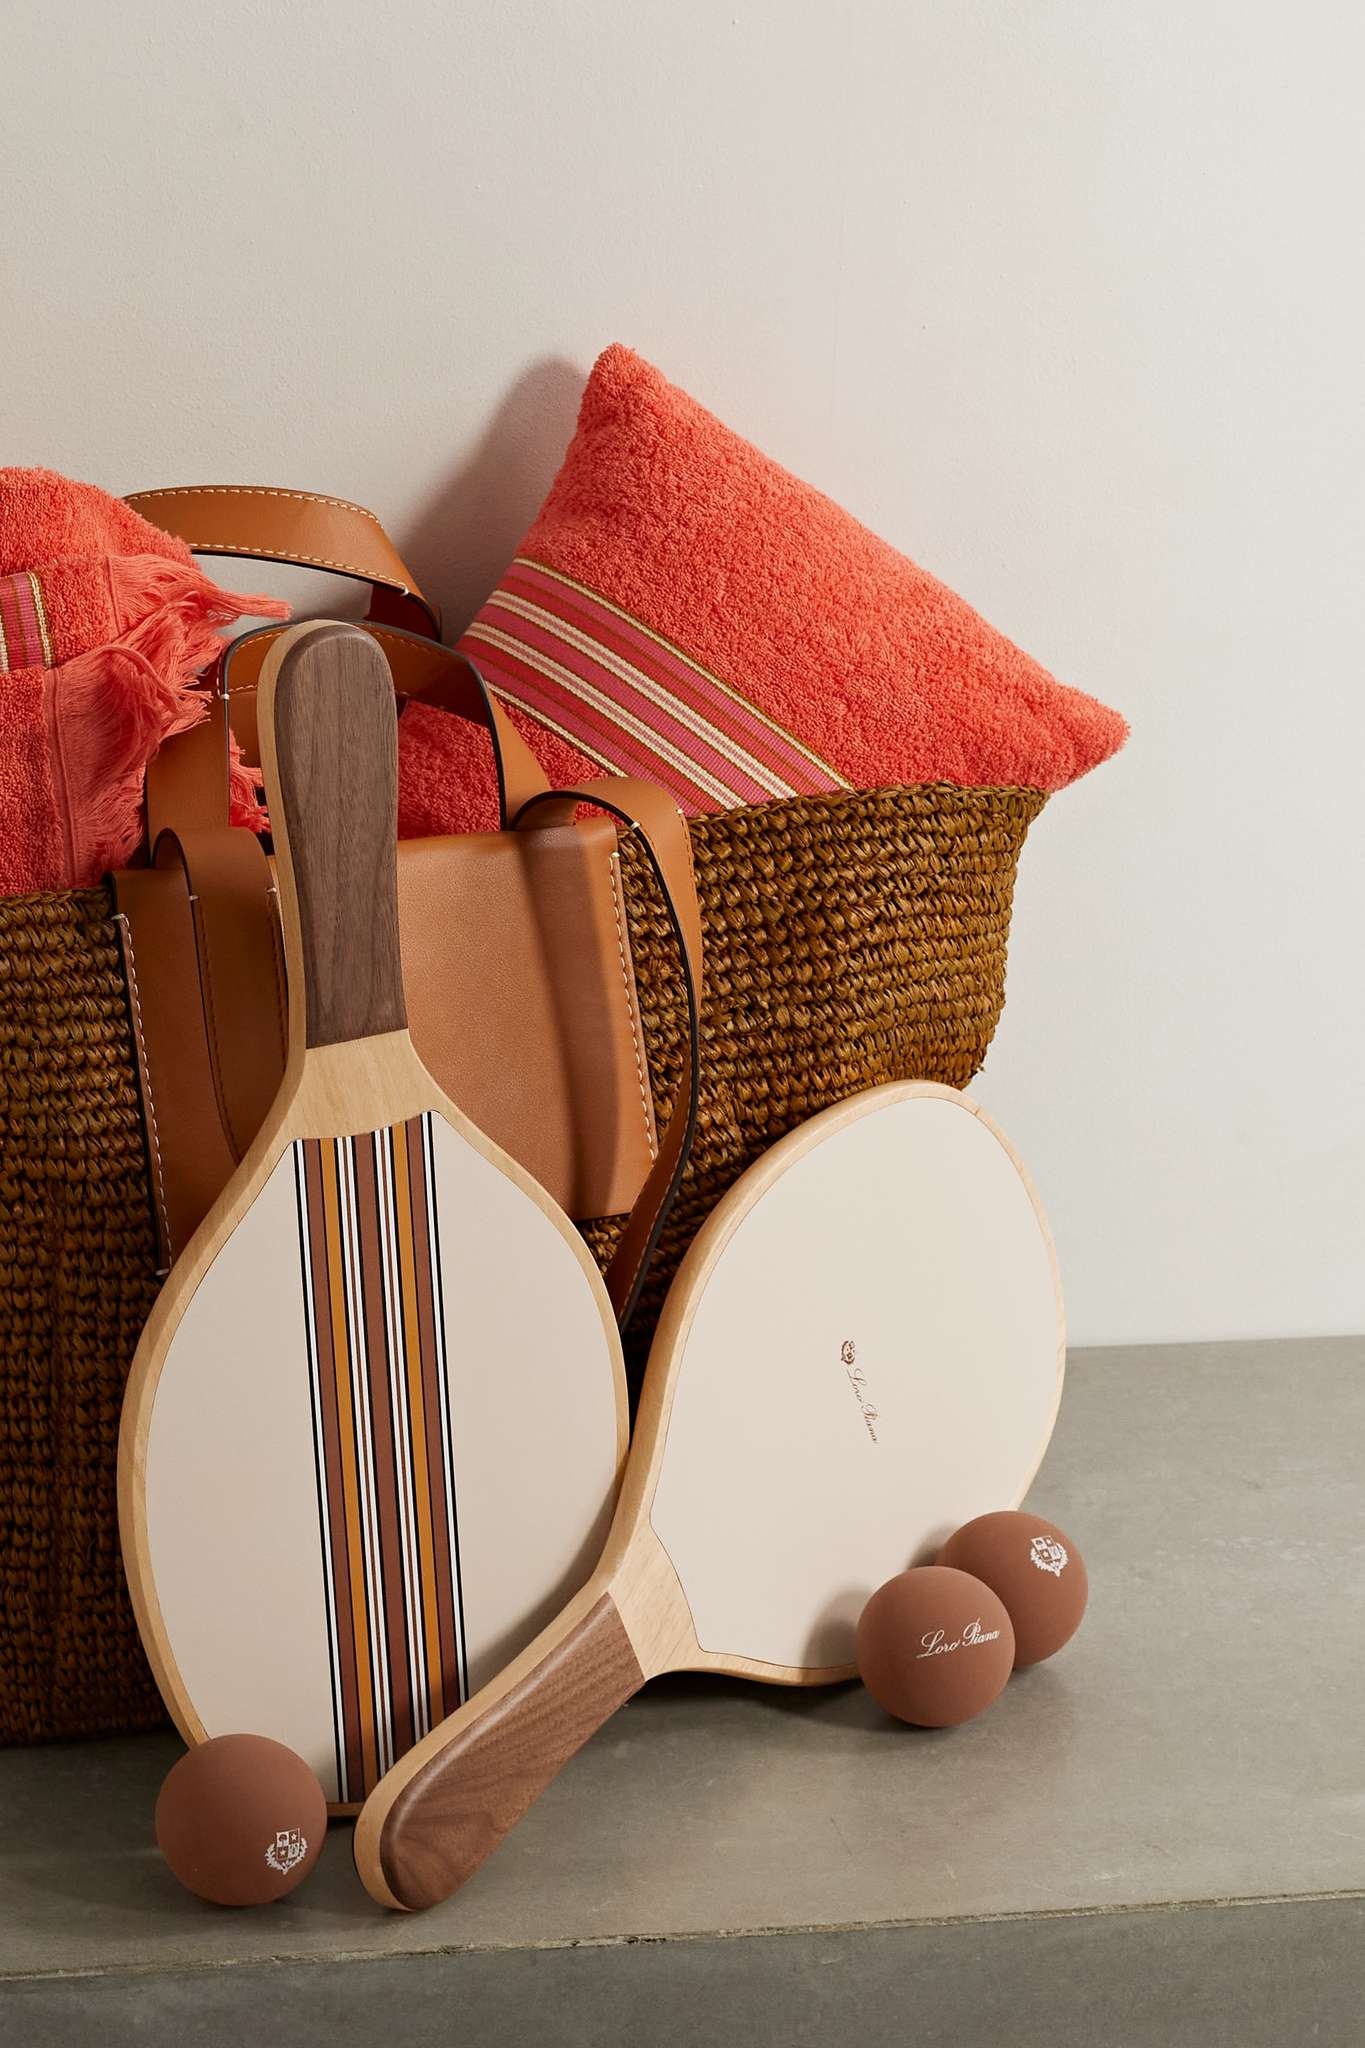 The Suitcase Stripe wood and leather paddleball set - 2